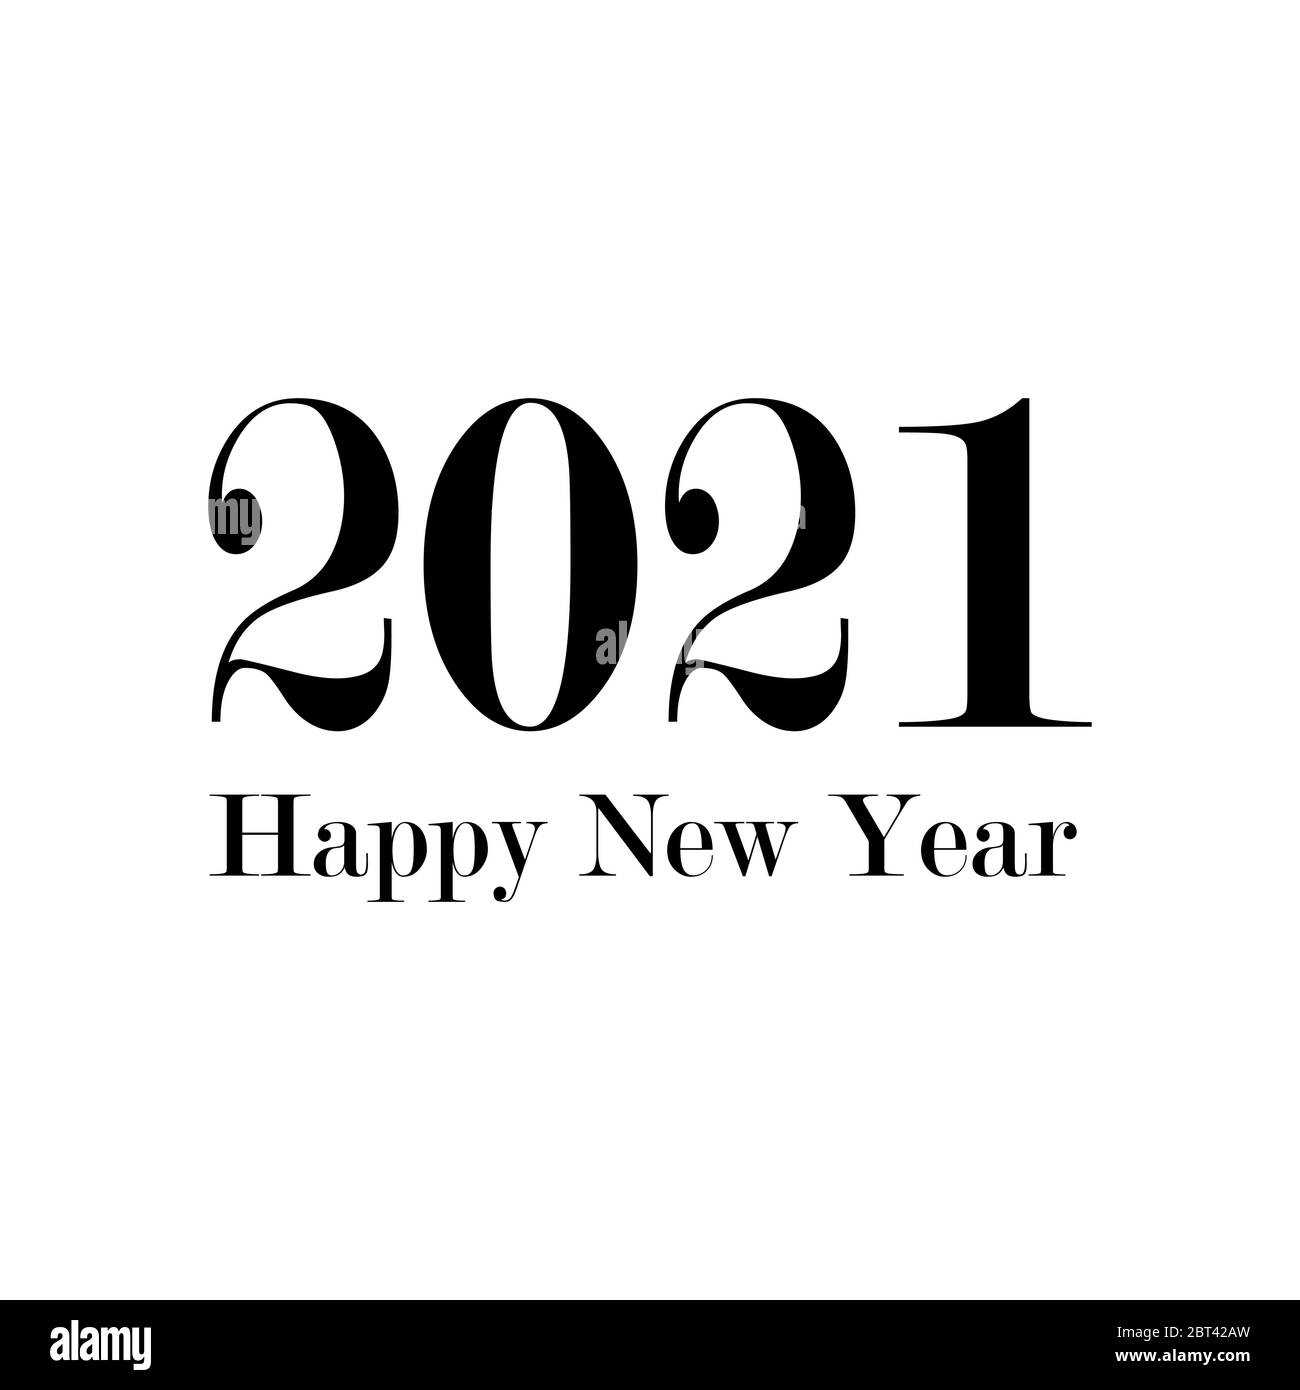 Happy New Year 2021 Design Template. Modern Design for Calendar ...